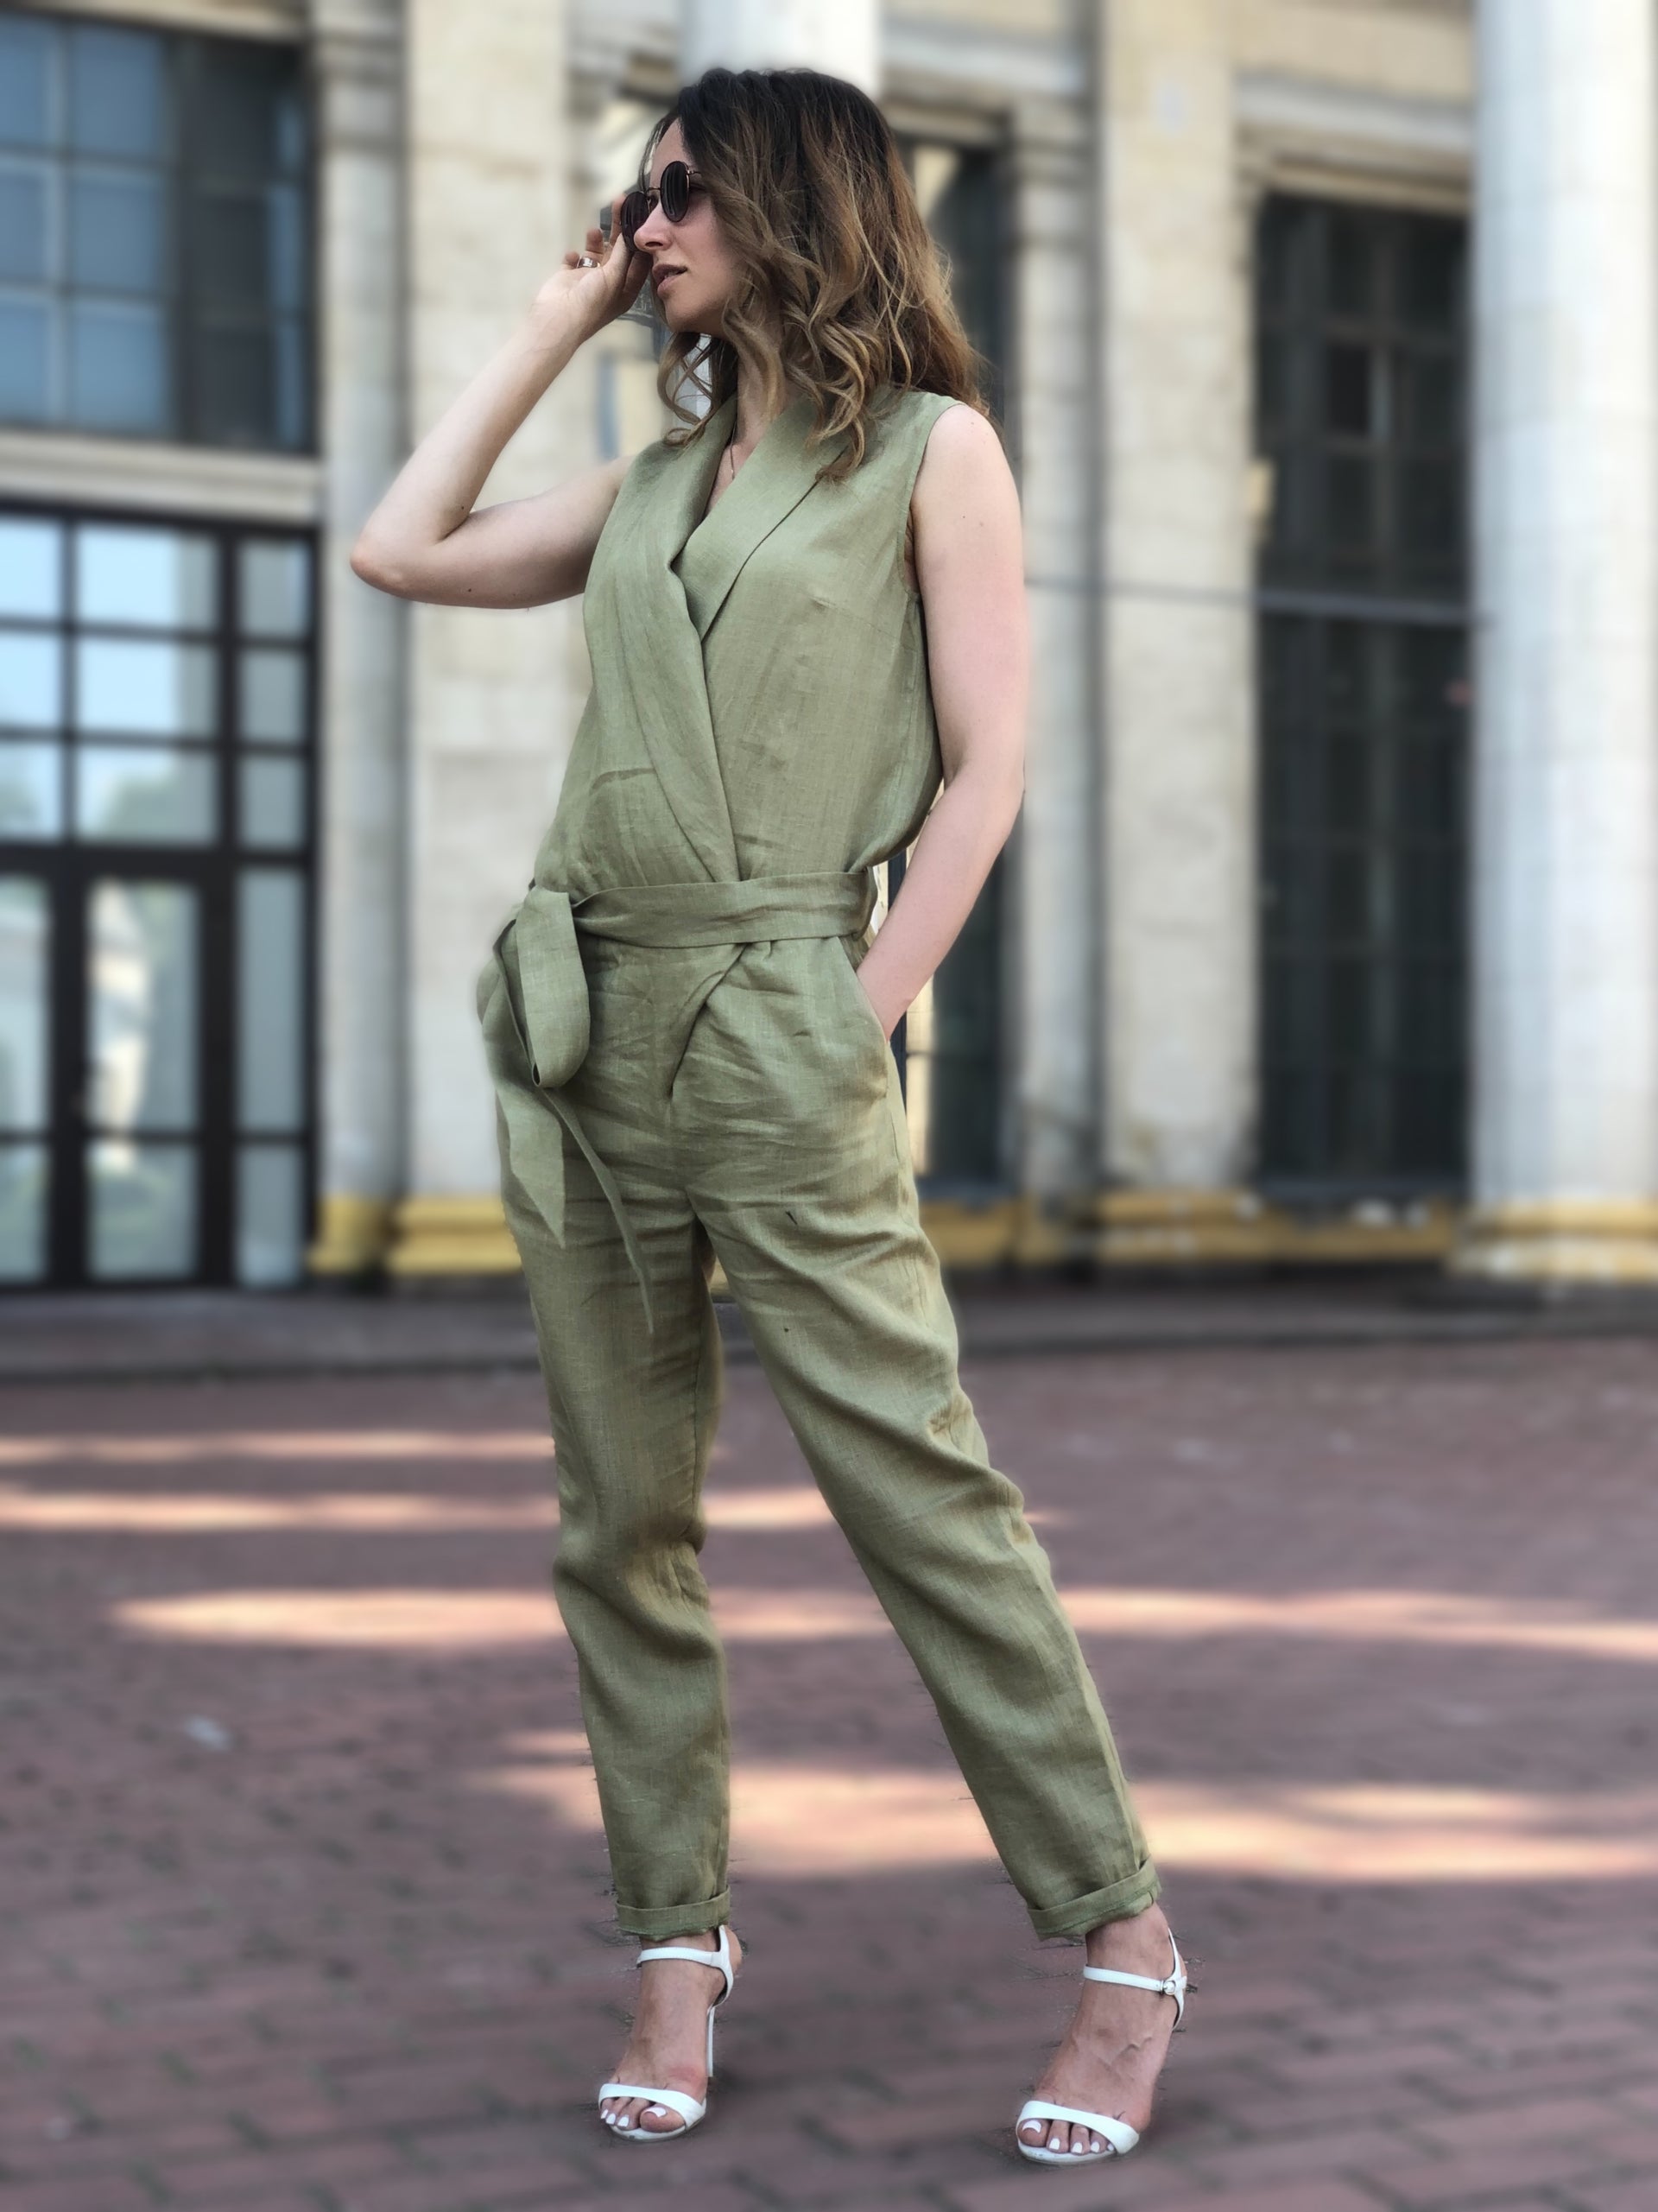 2019 New Women's cotton Cargo Pants Leisure Trousers more Pocket pants pants